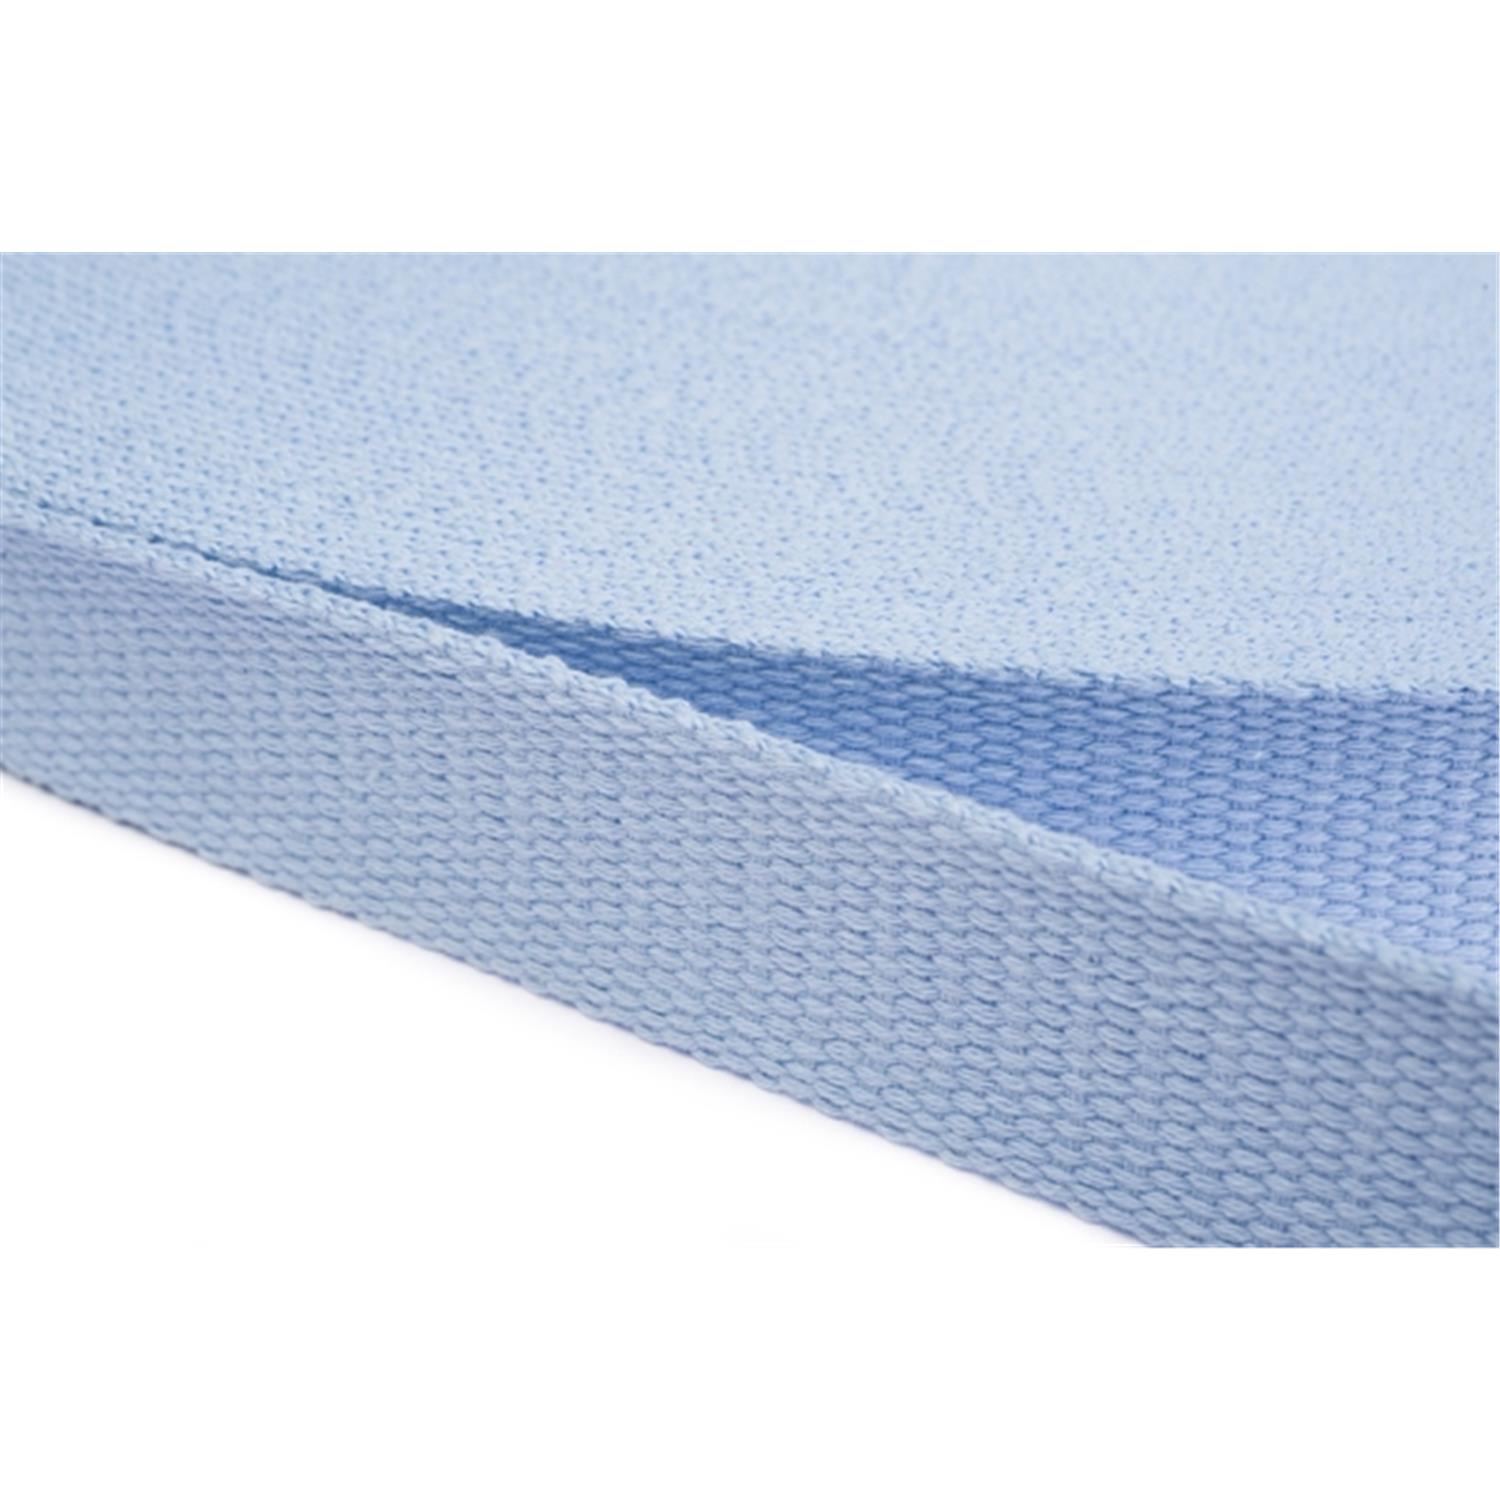 Gurtband aus Baumwolle 10mm in 20 Farben 11 - hellblau 12 Meter